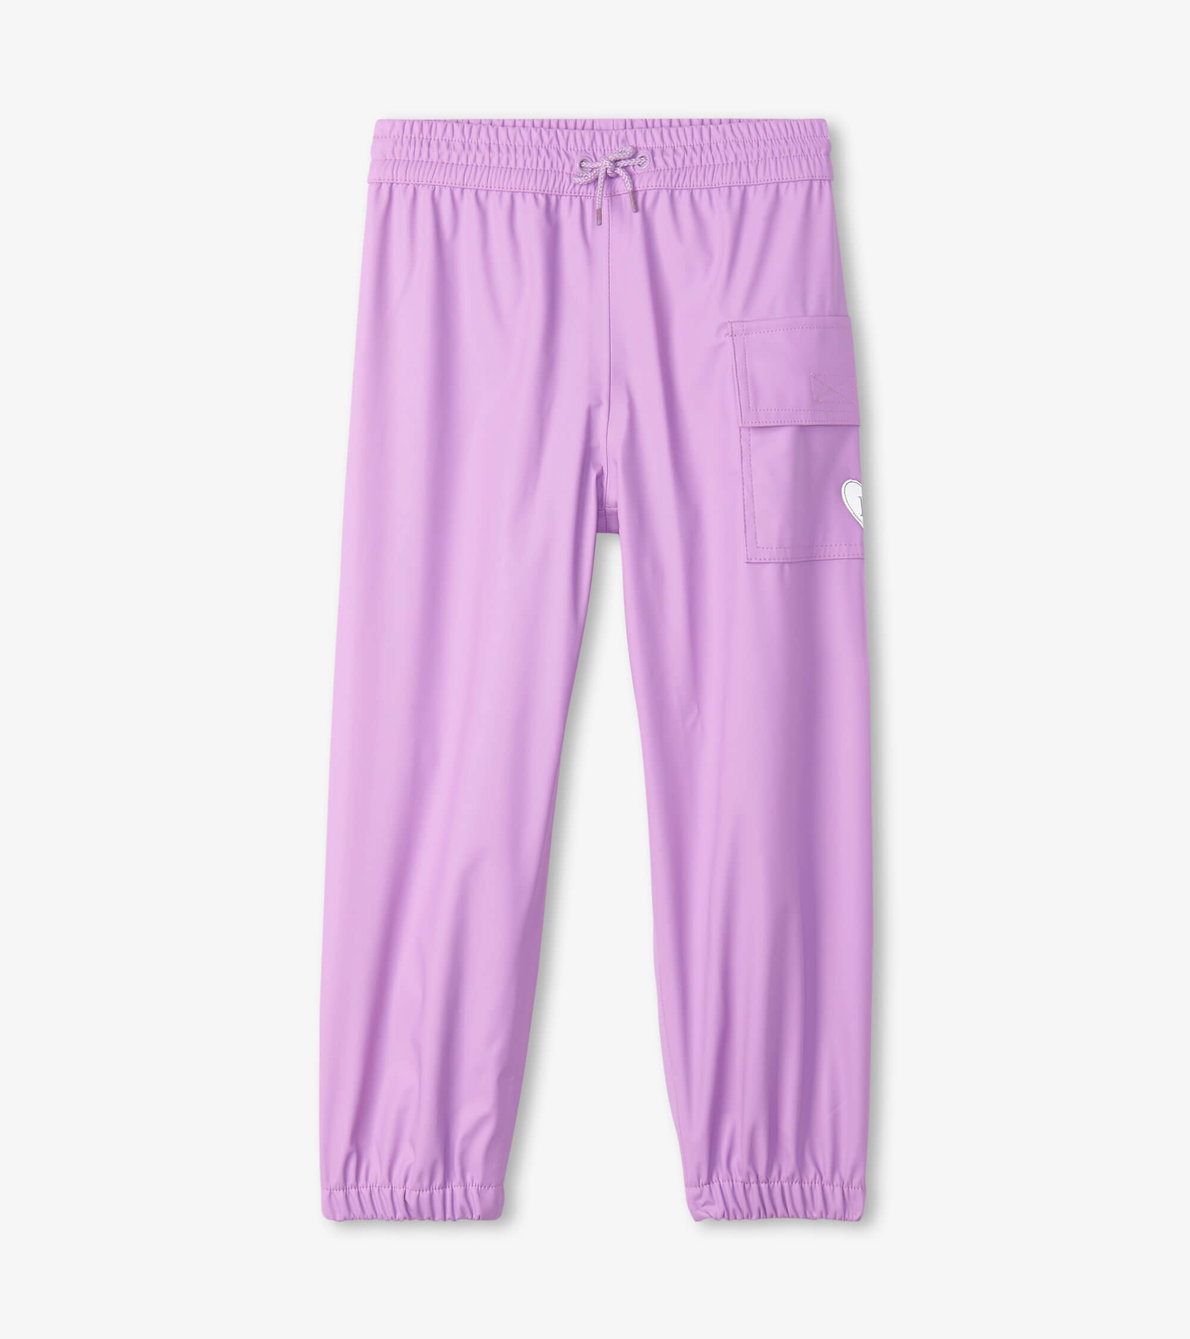 View larger image of Lilac Splash Pants